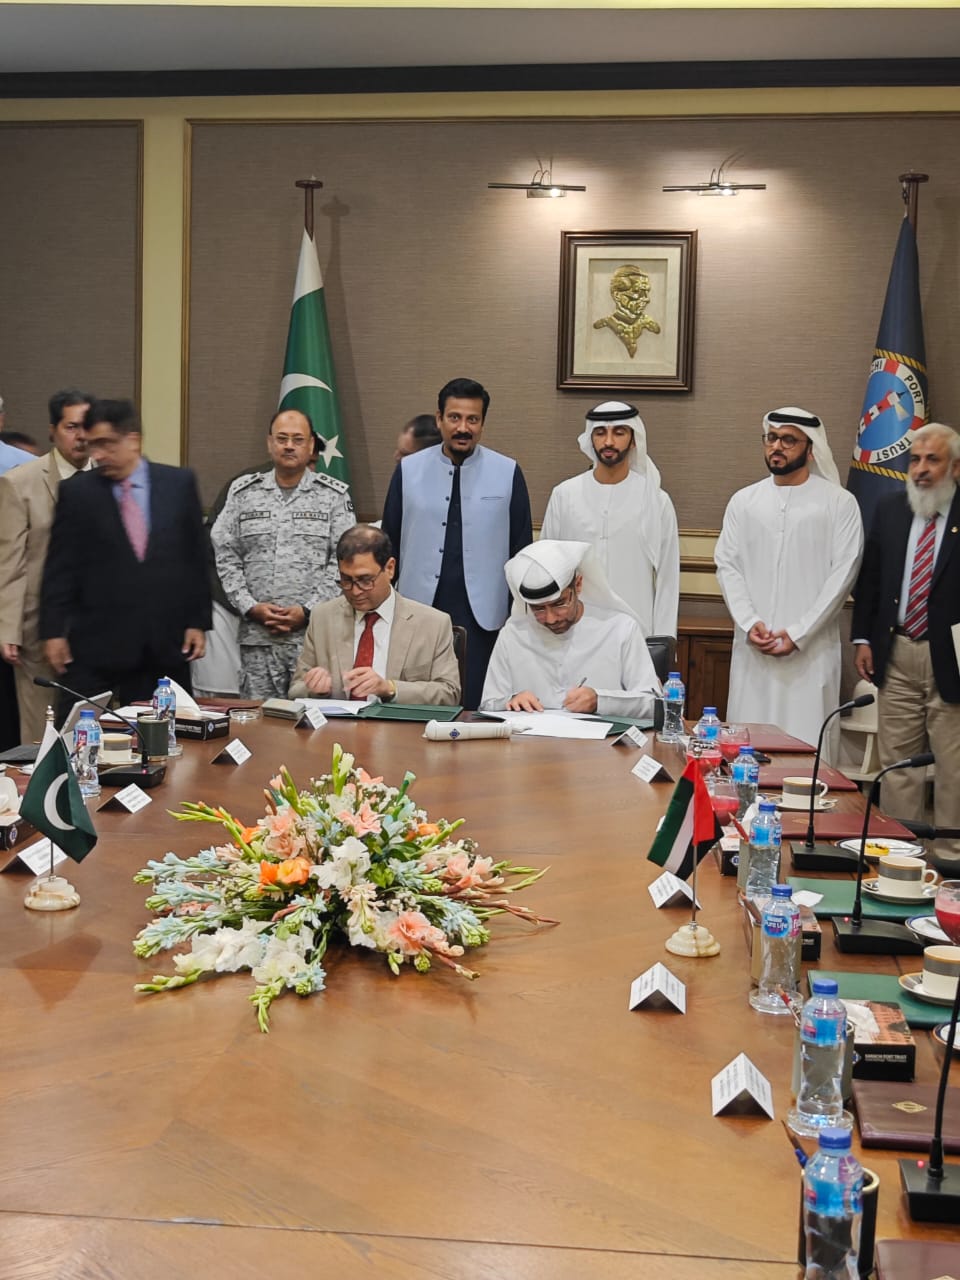 Abu Dhabi Ports Group, KPT signs strategic MOU to develop advanced port infrastructure at Karachi Port